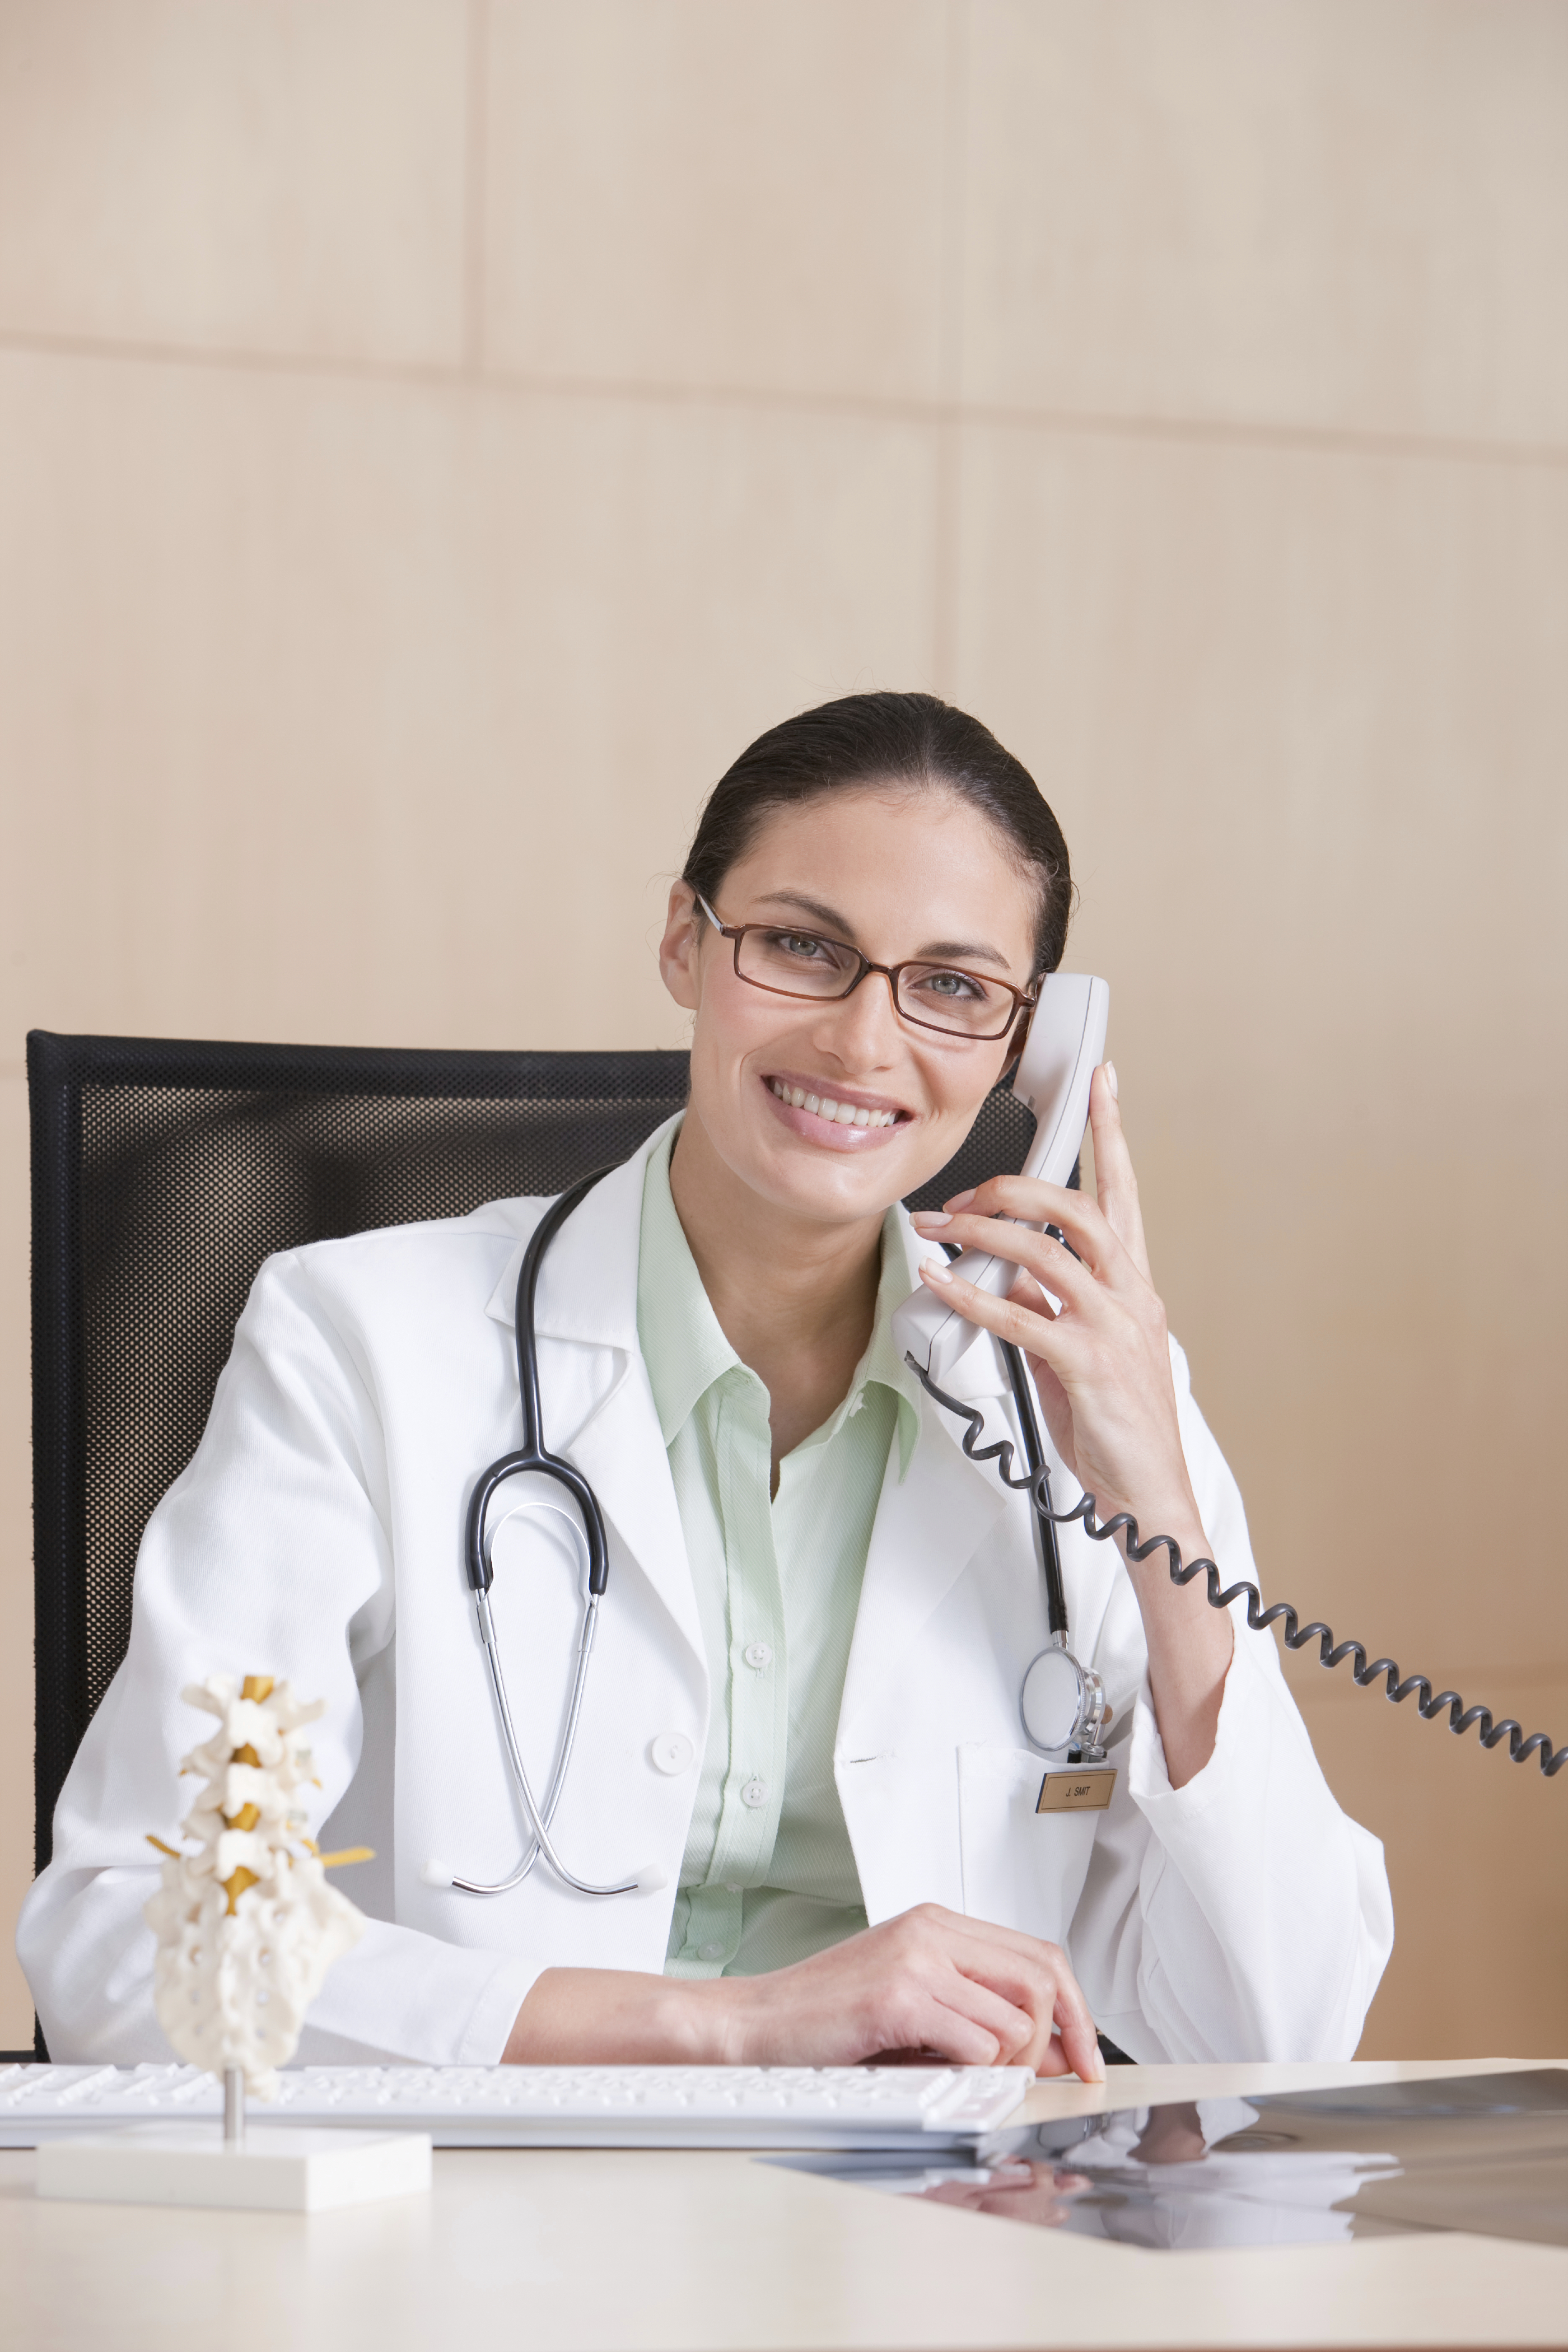 Washington Travel Nursing Positions Millenia Medical Staffing 888-686-6877